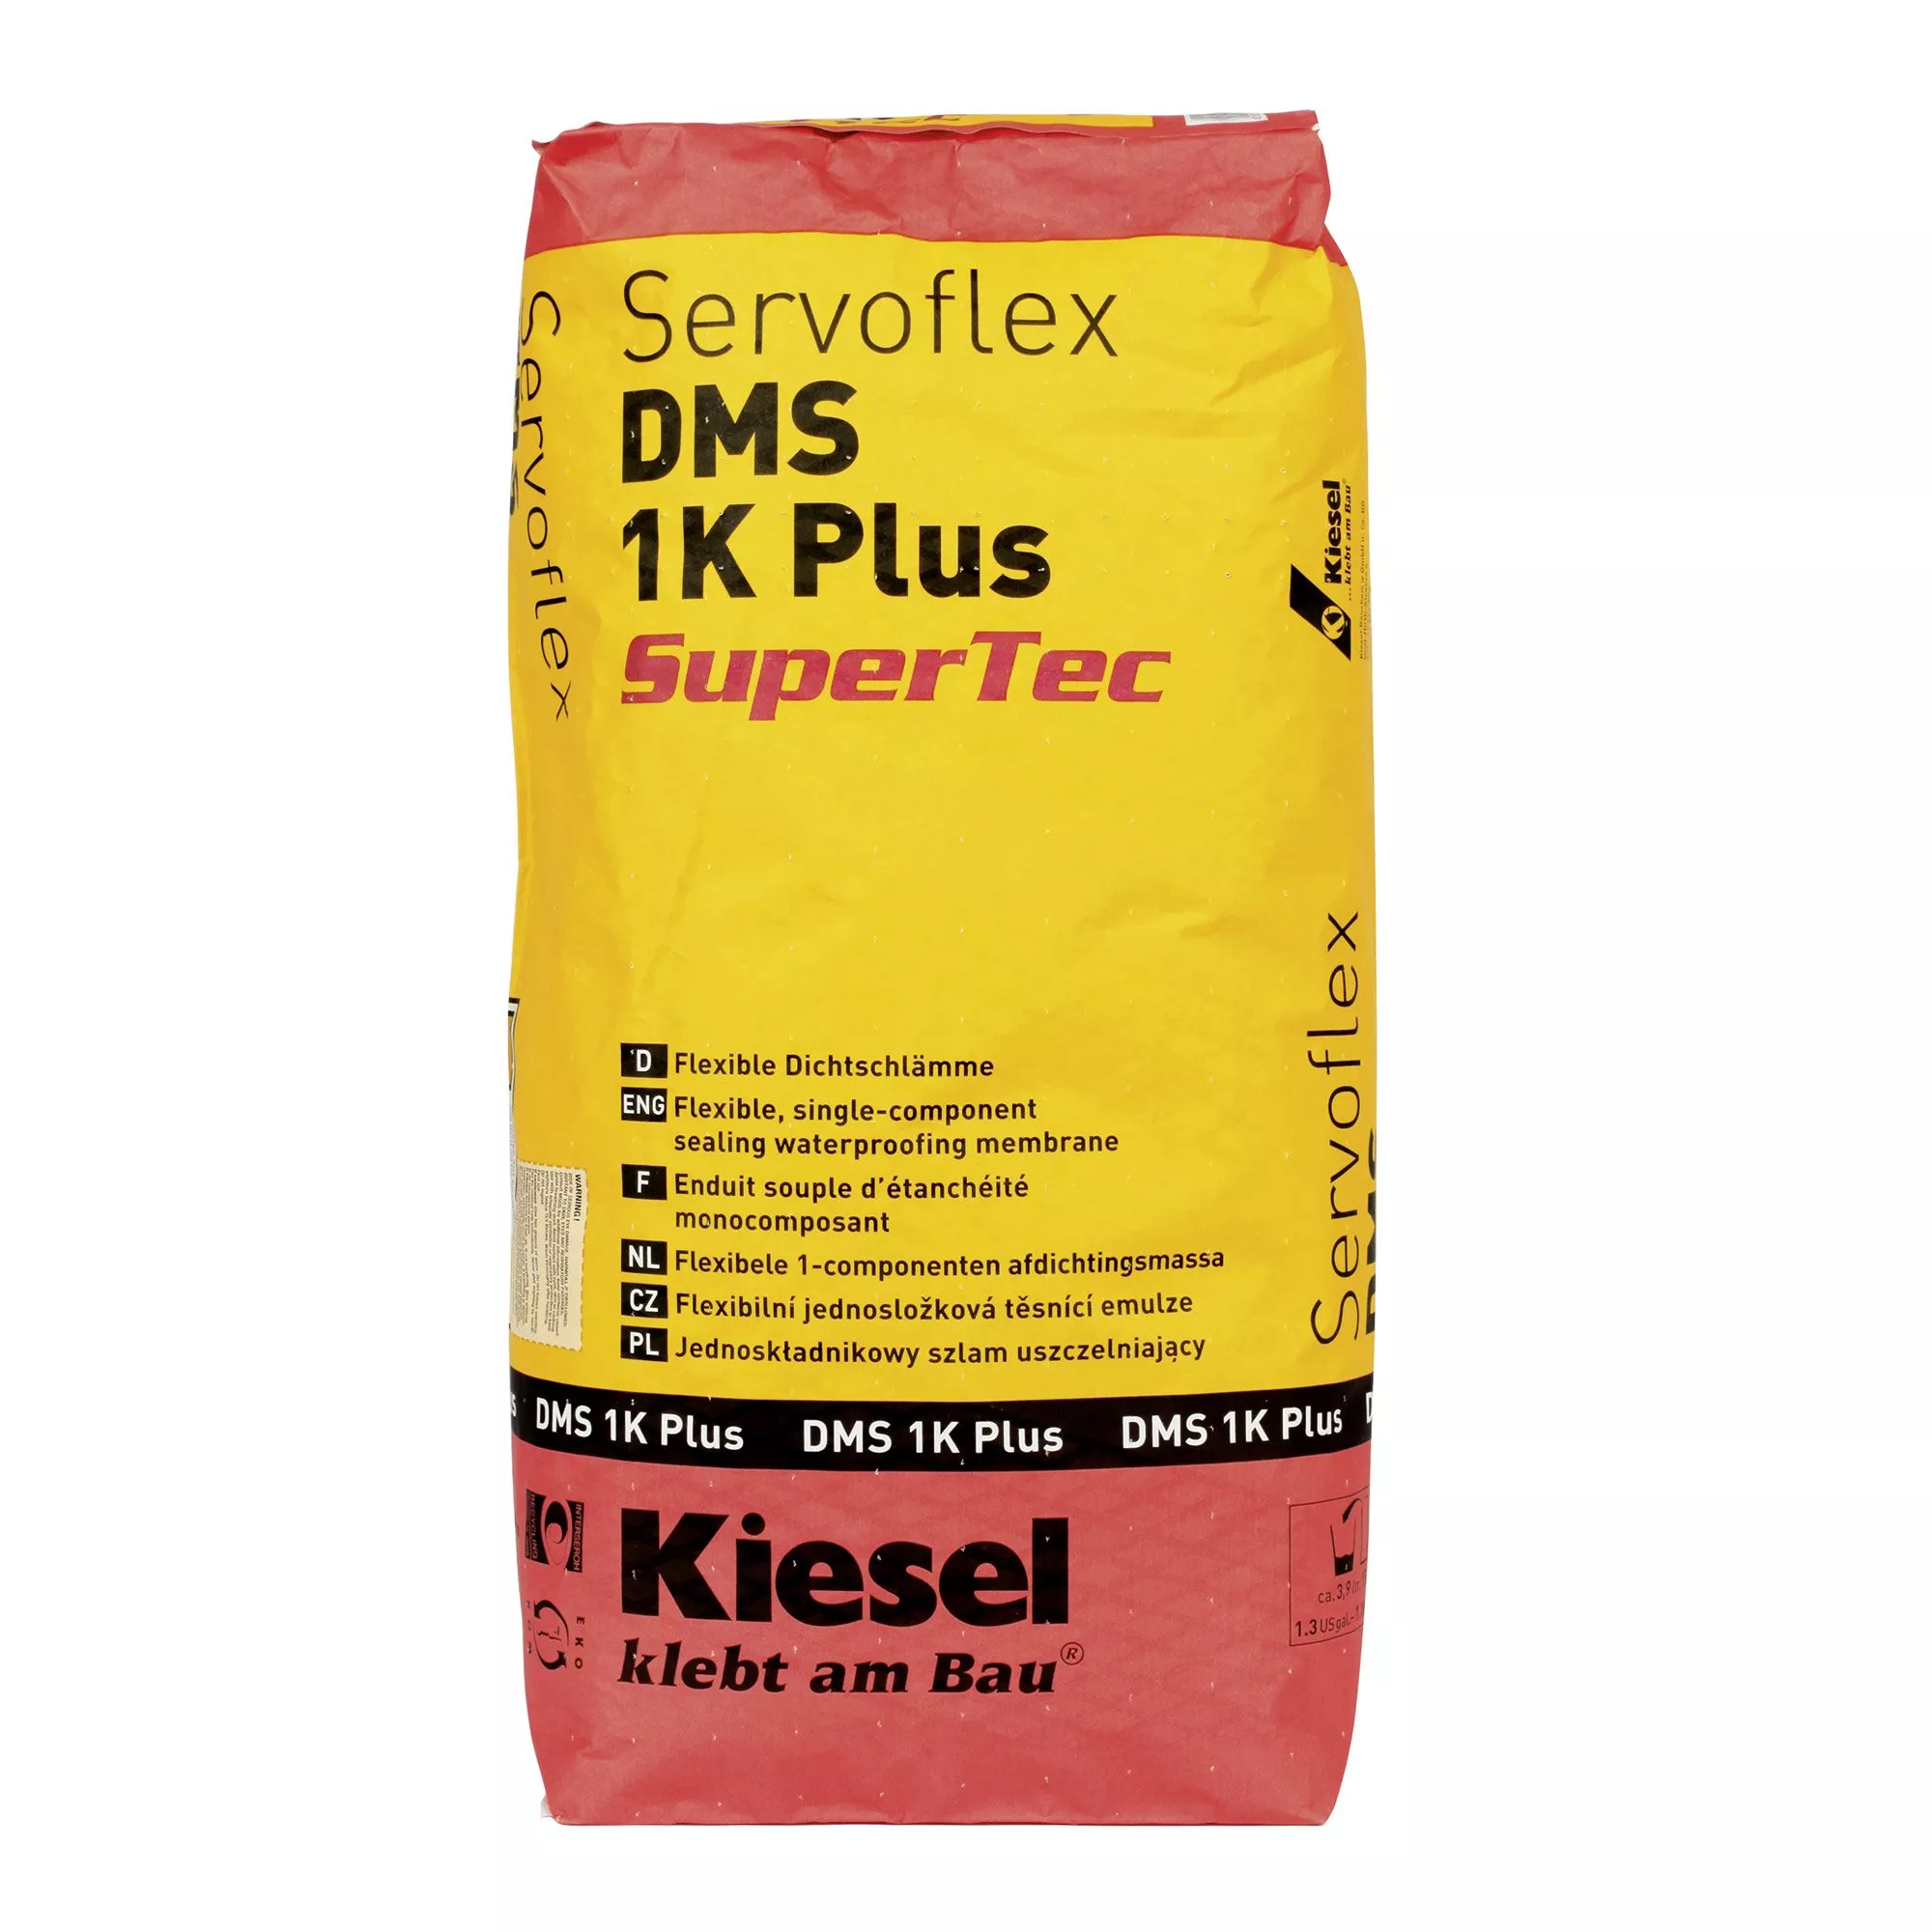 Kiesel Servoflex DMS 1K Plus SuperTec - Flexible, 1-komponentige Dichtschlämme (15KG)